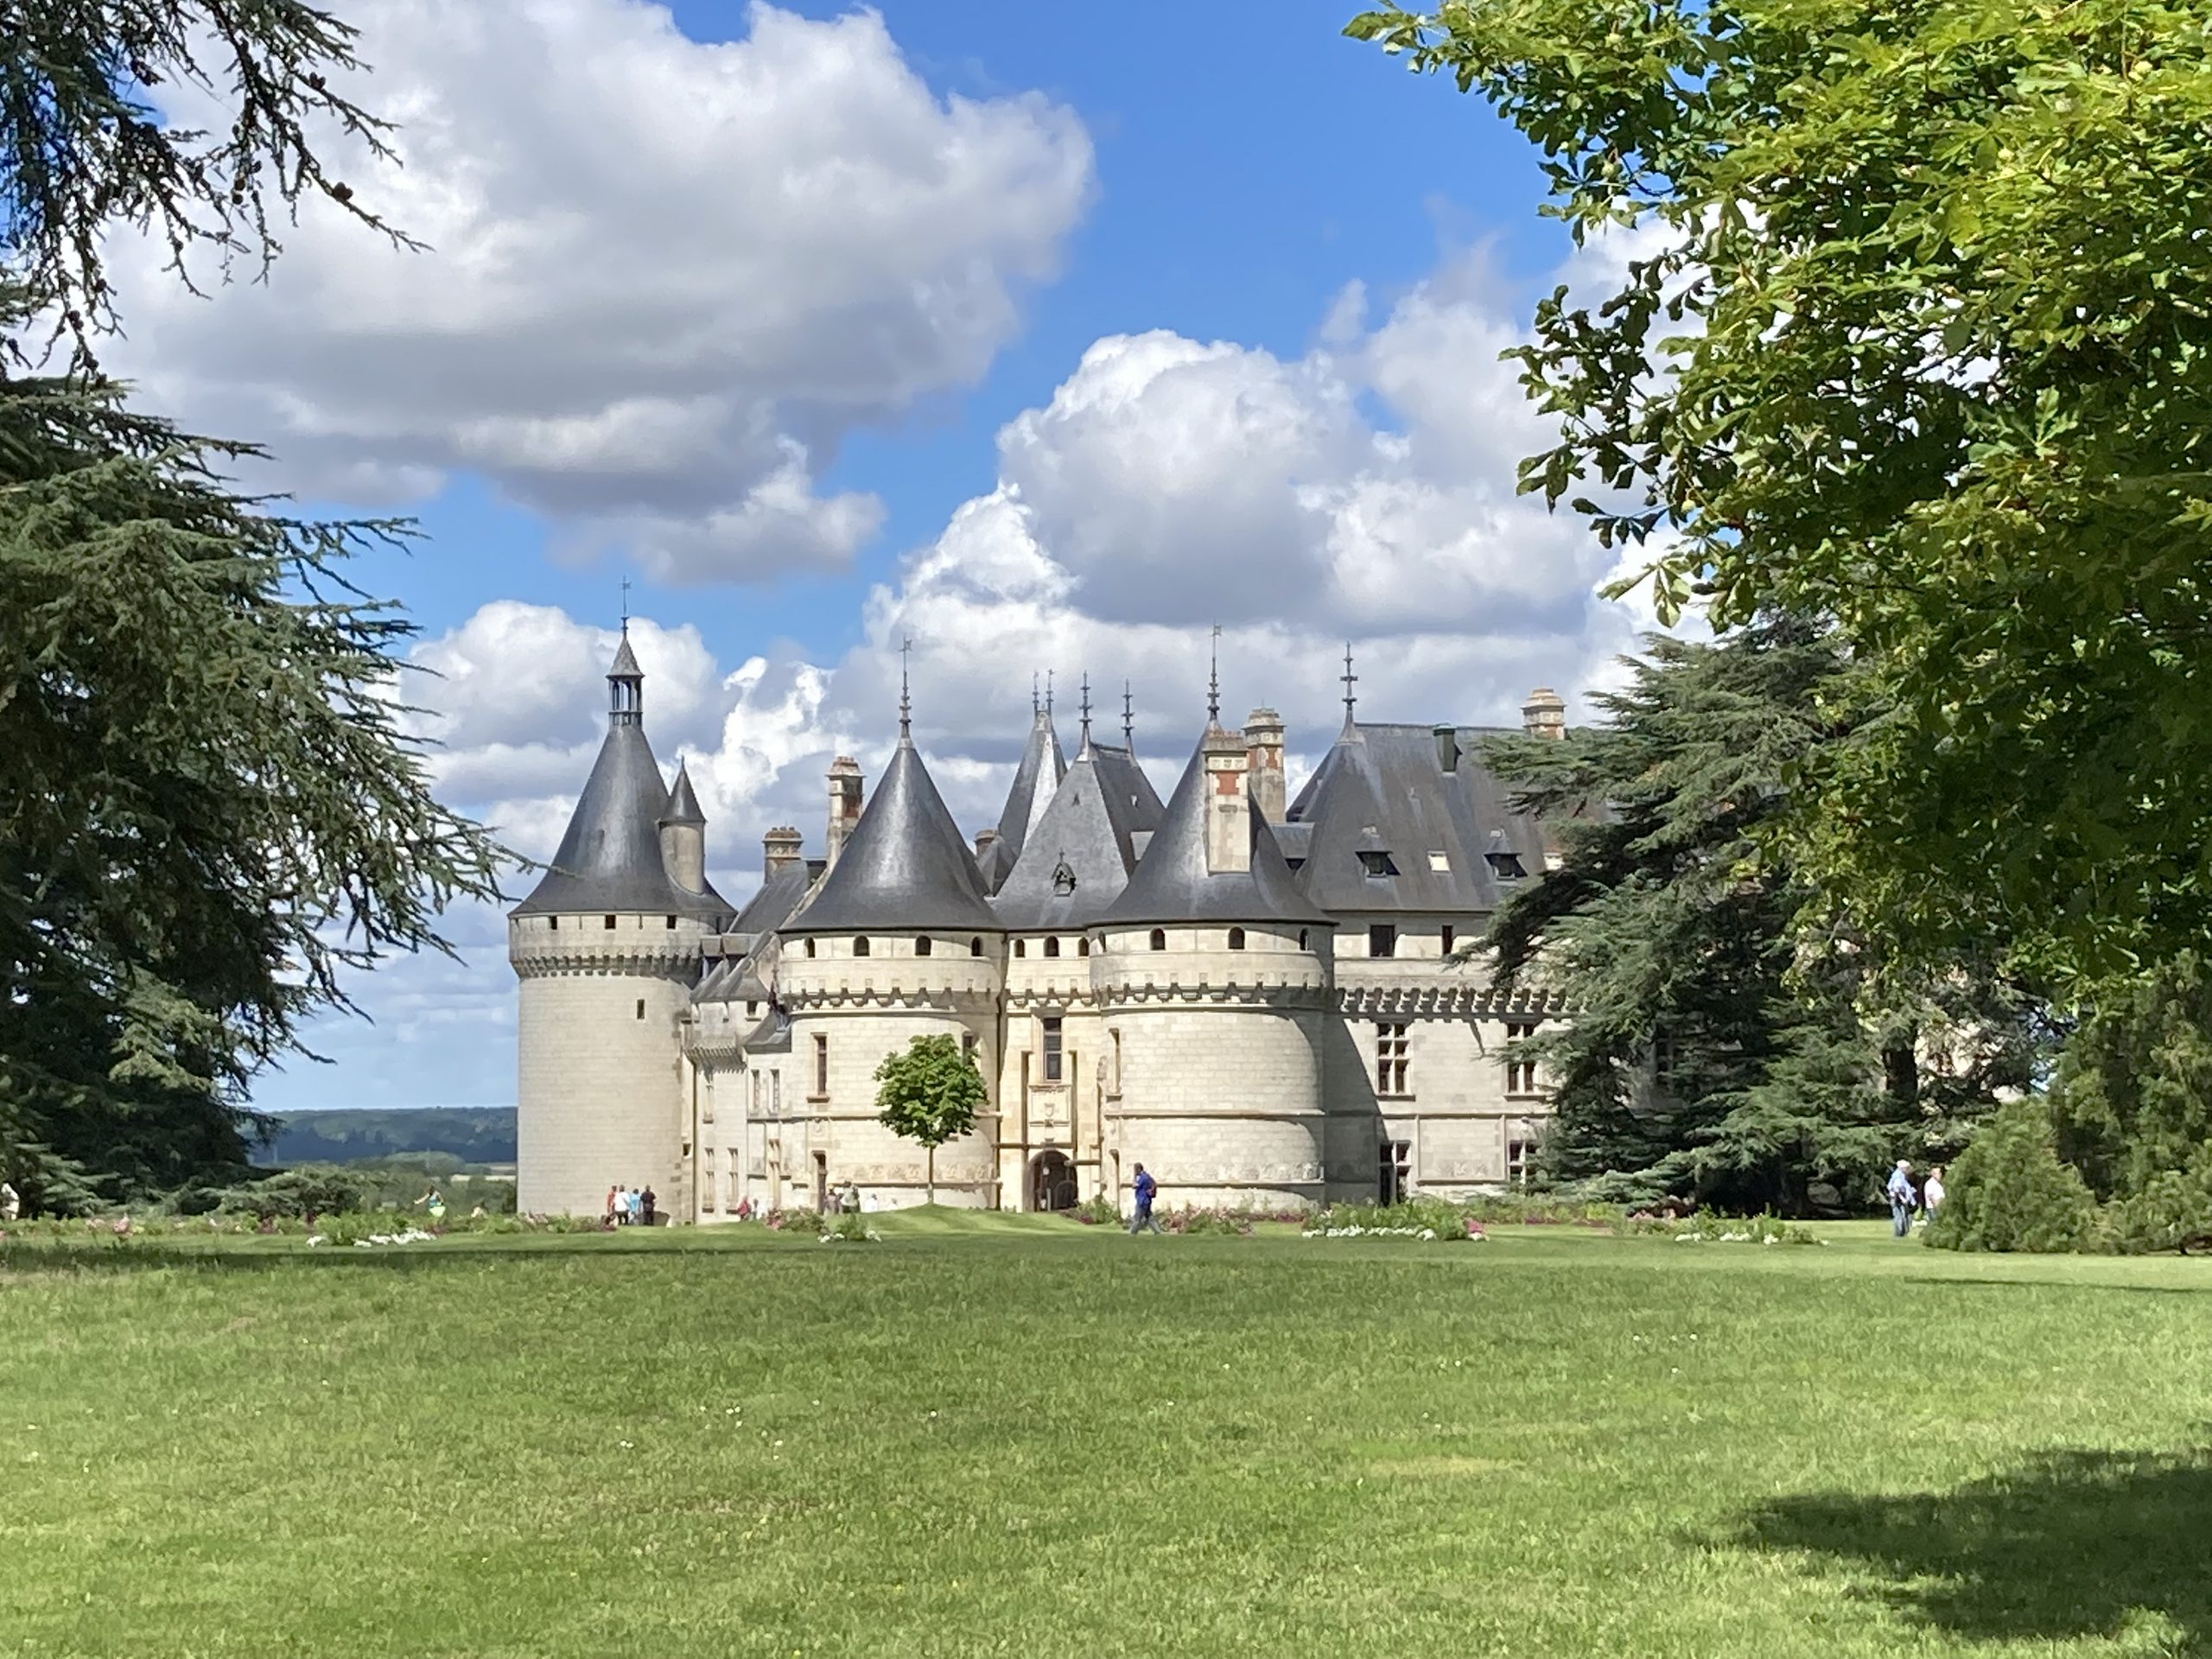 Chateau de Chaumont from a distance